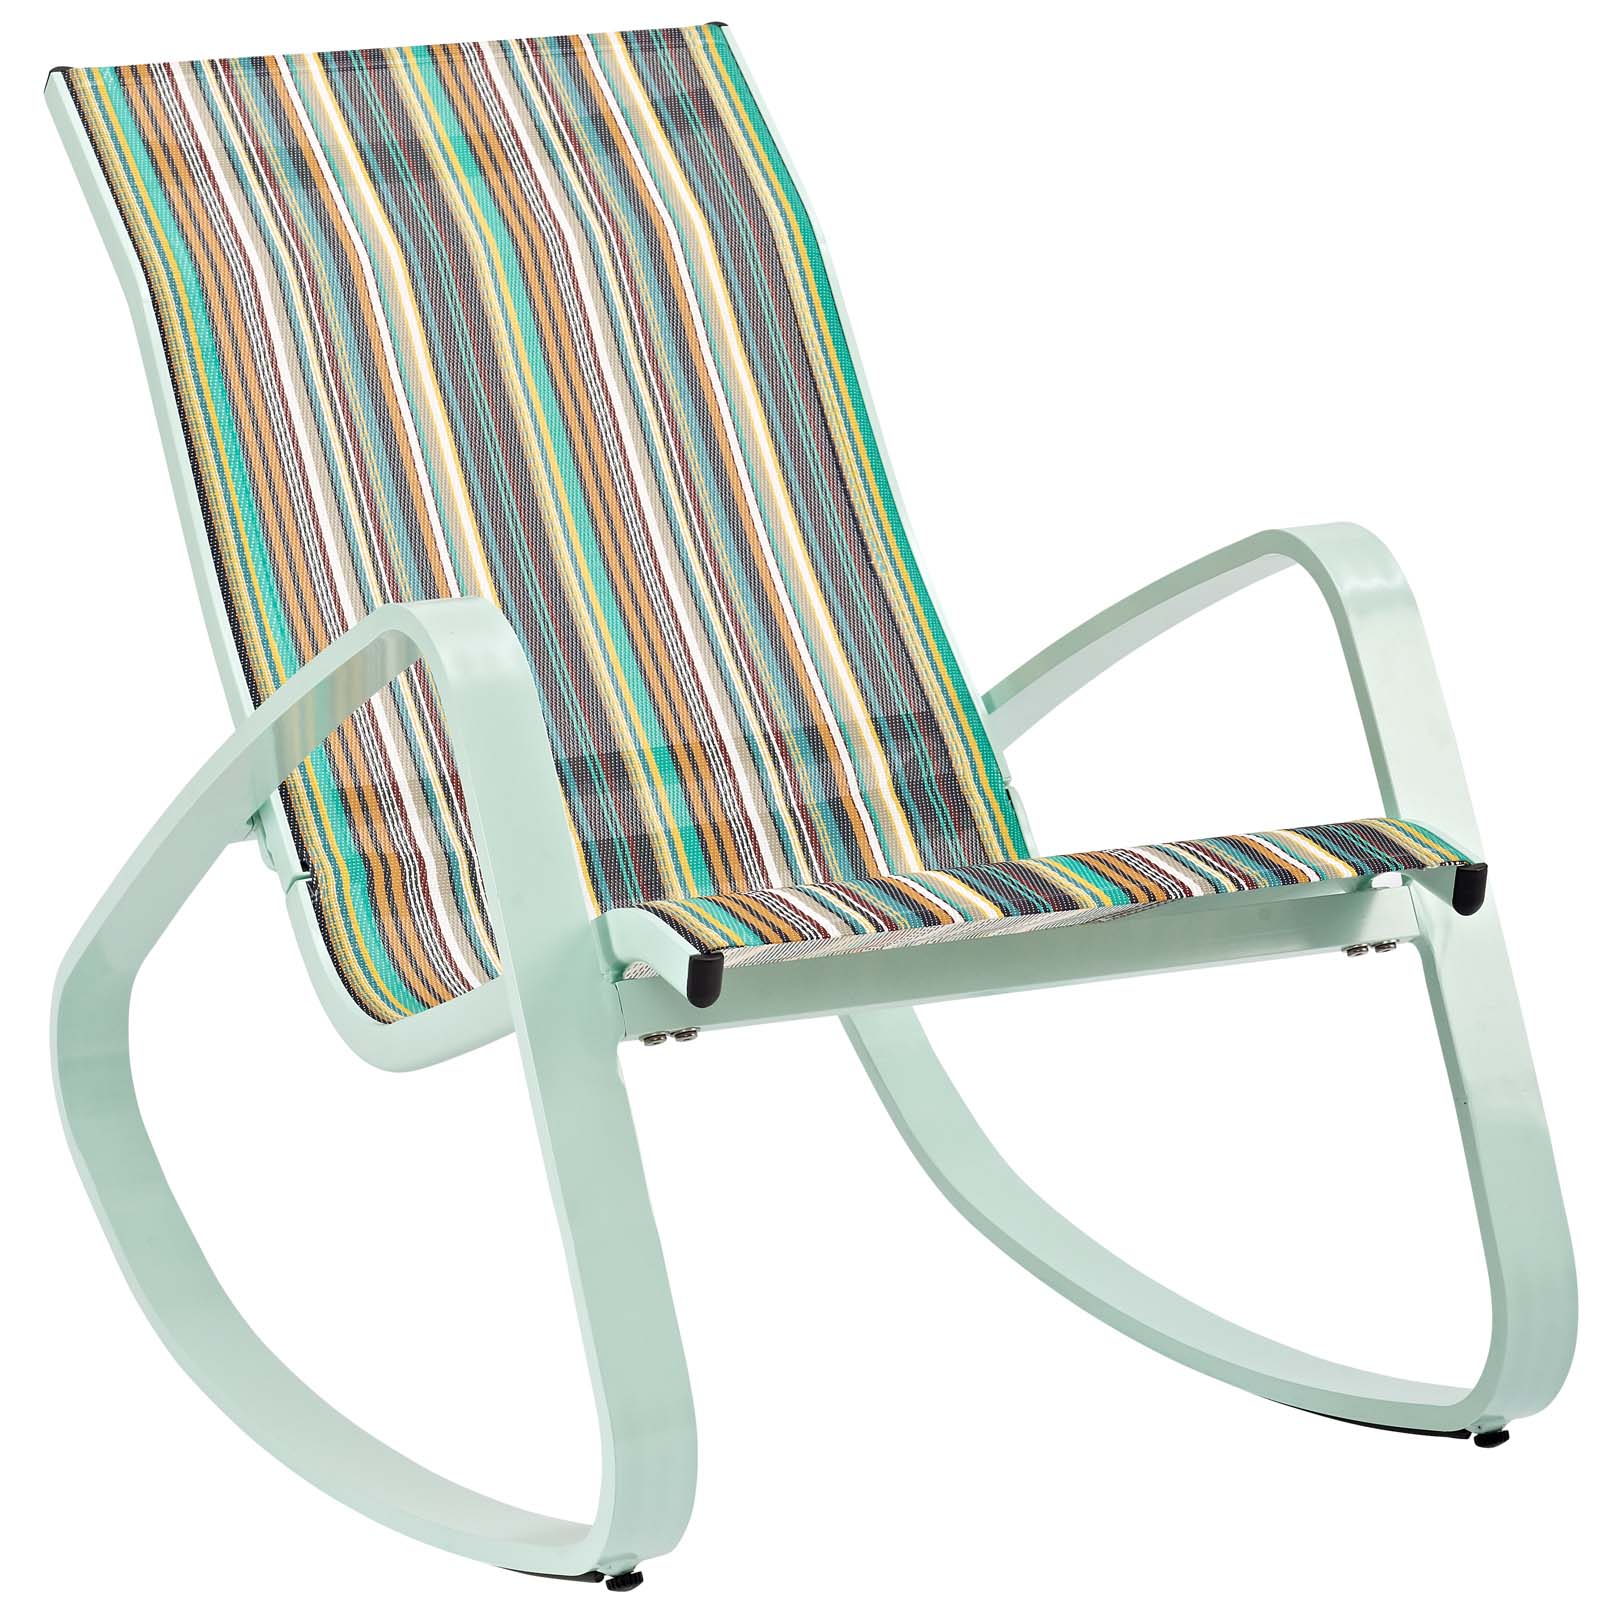 Modway Traveler Rocking Lounge Chair Outdoor Patio Mesh Sling Set of 2 in Green Stripe - image 5 of 6